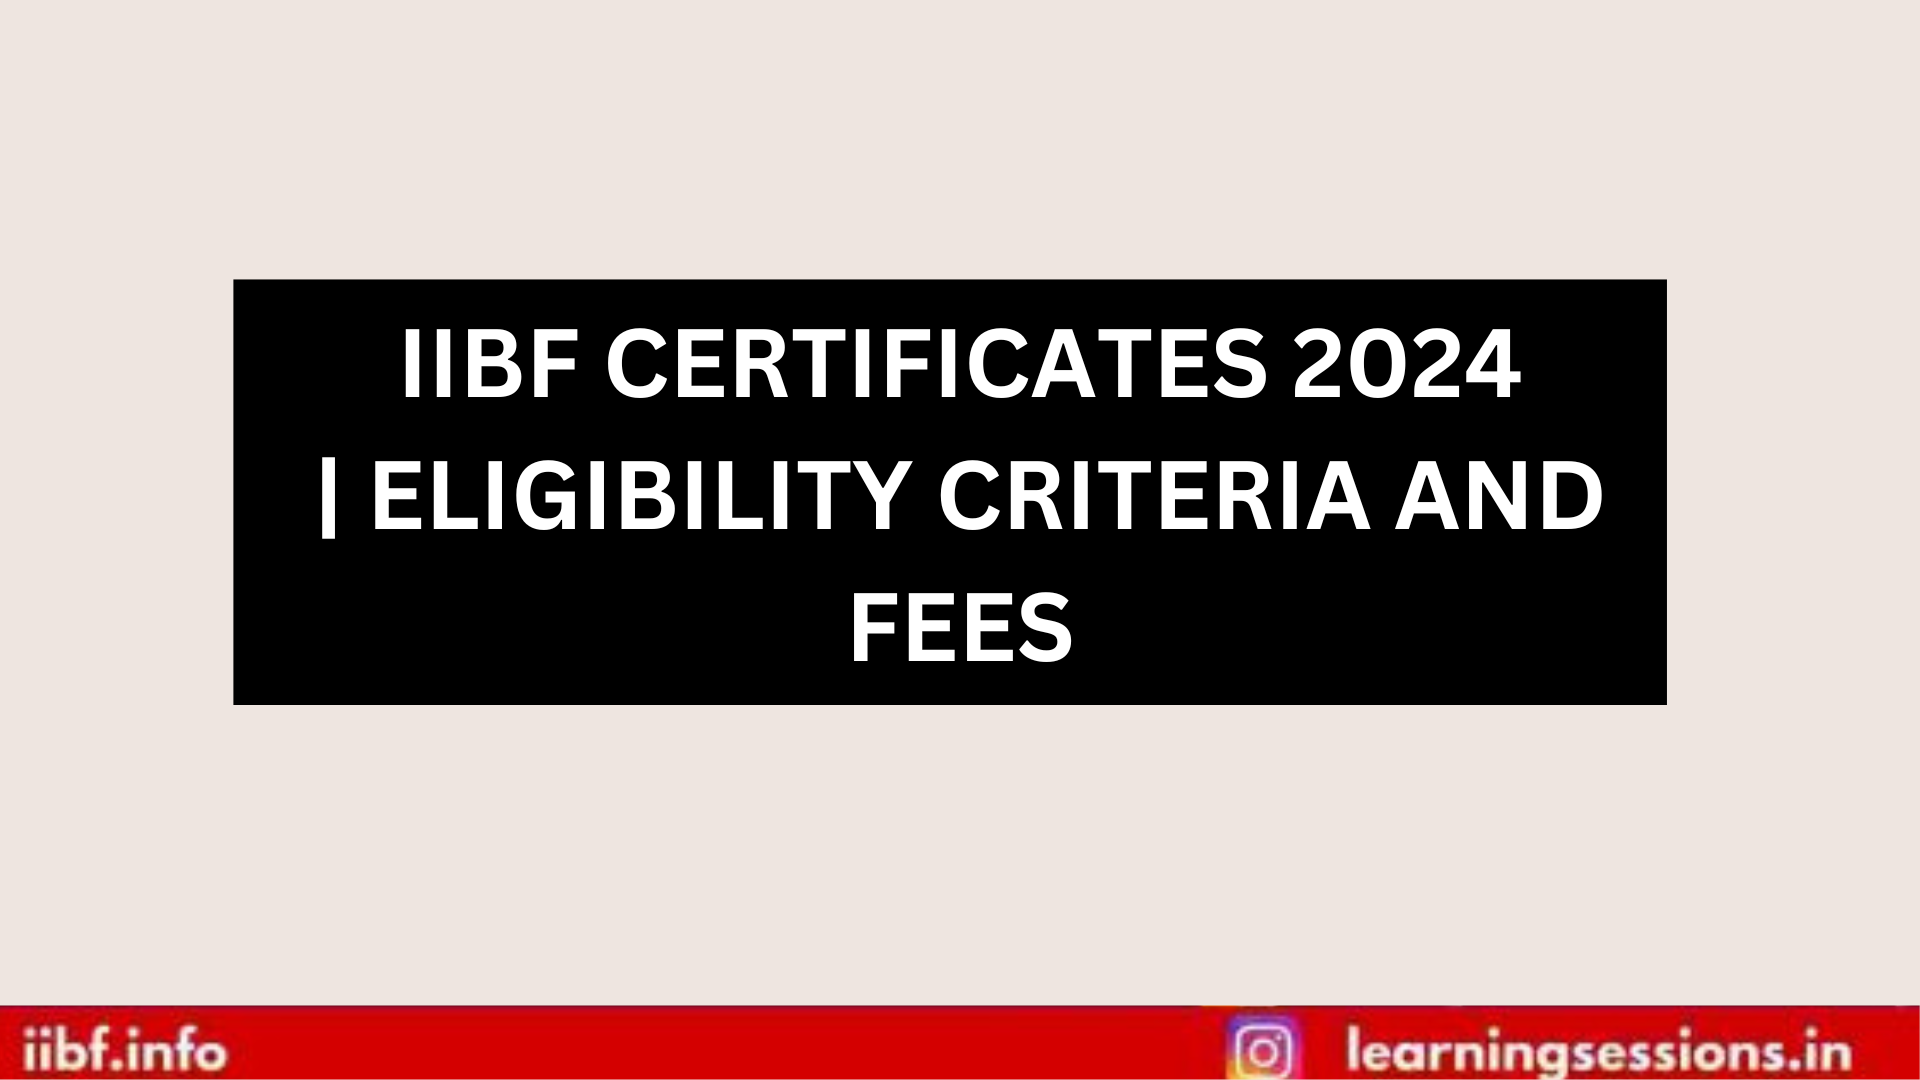 IIBF CERTIFICATES 2024